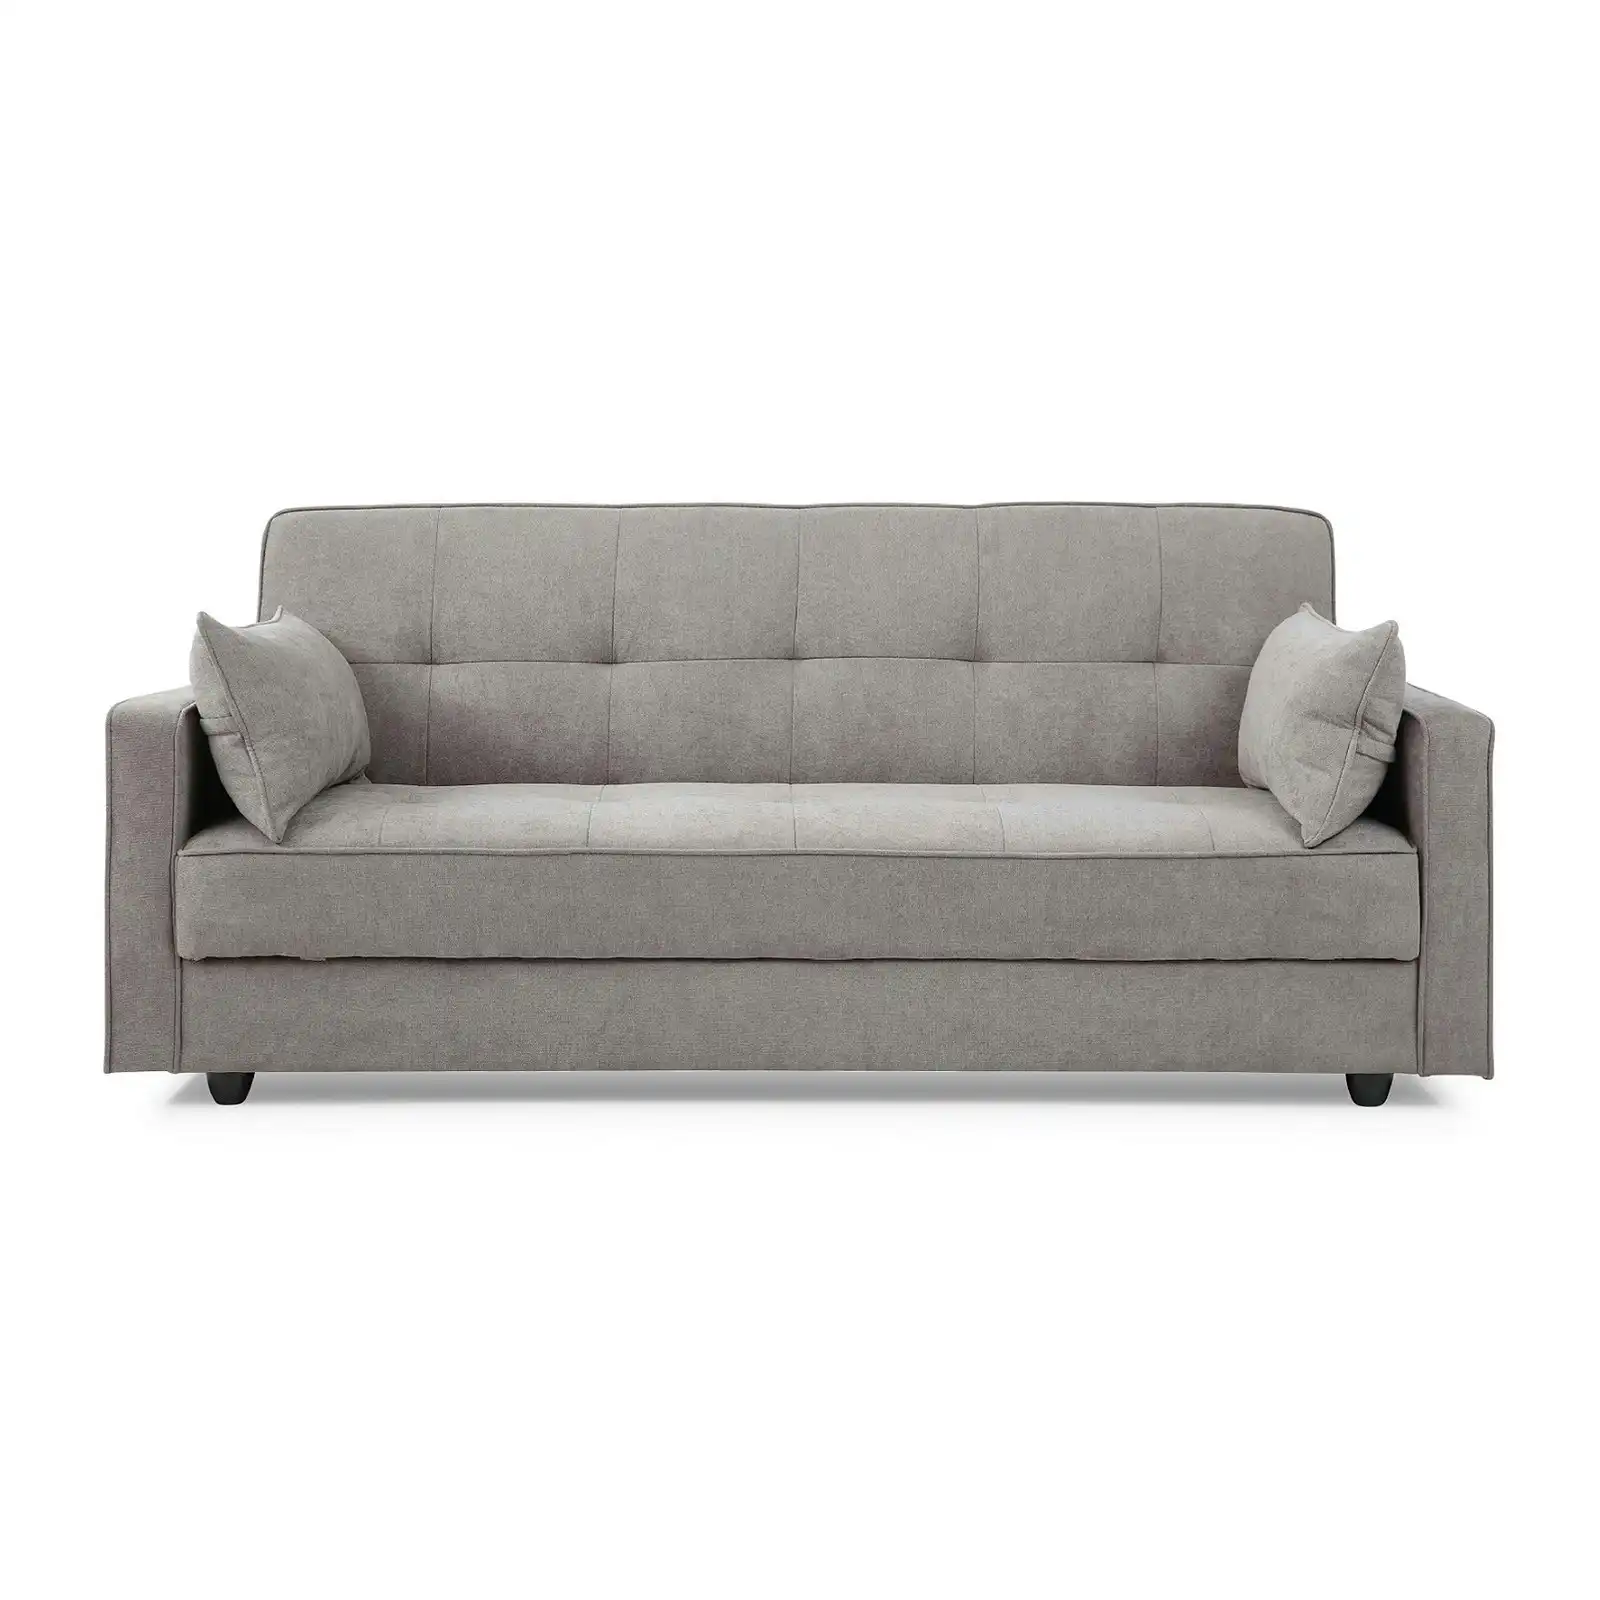 Junny Sofa Bed(Grey)